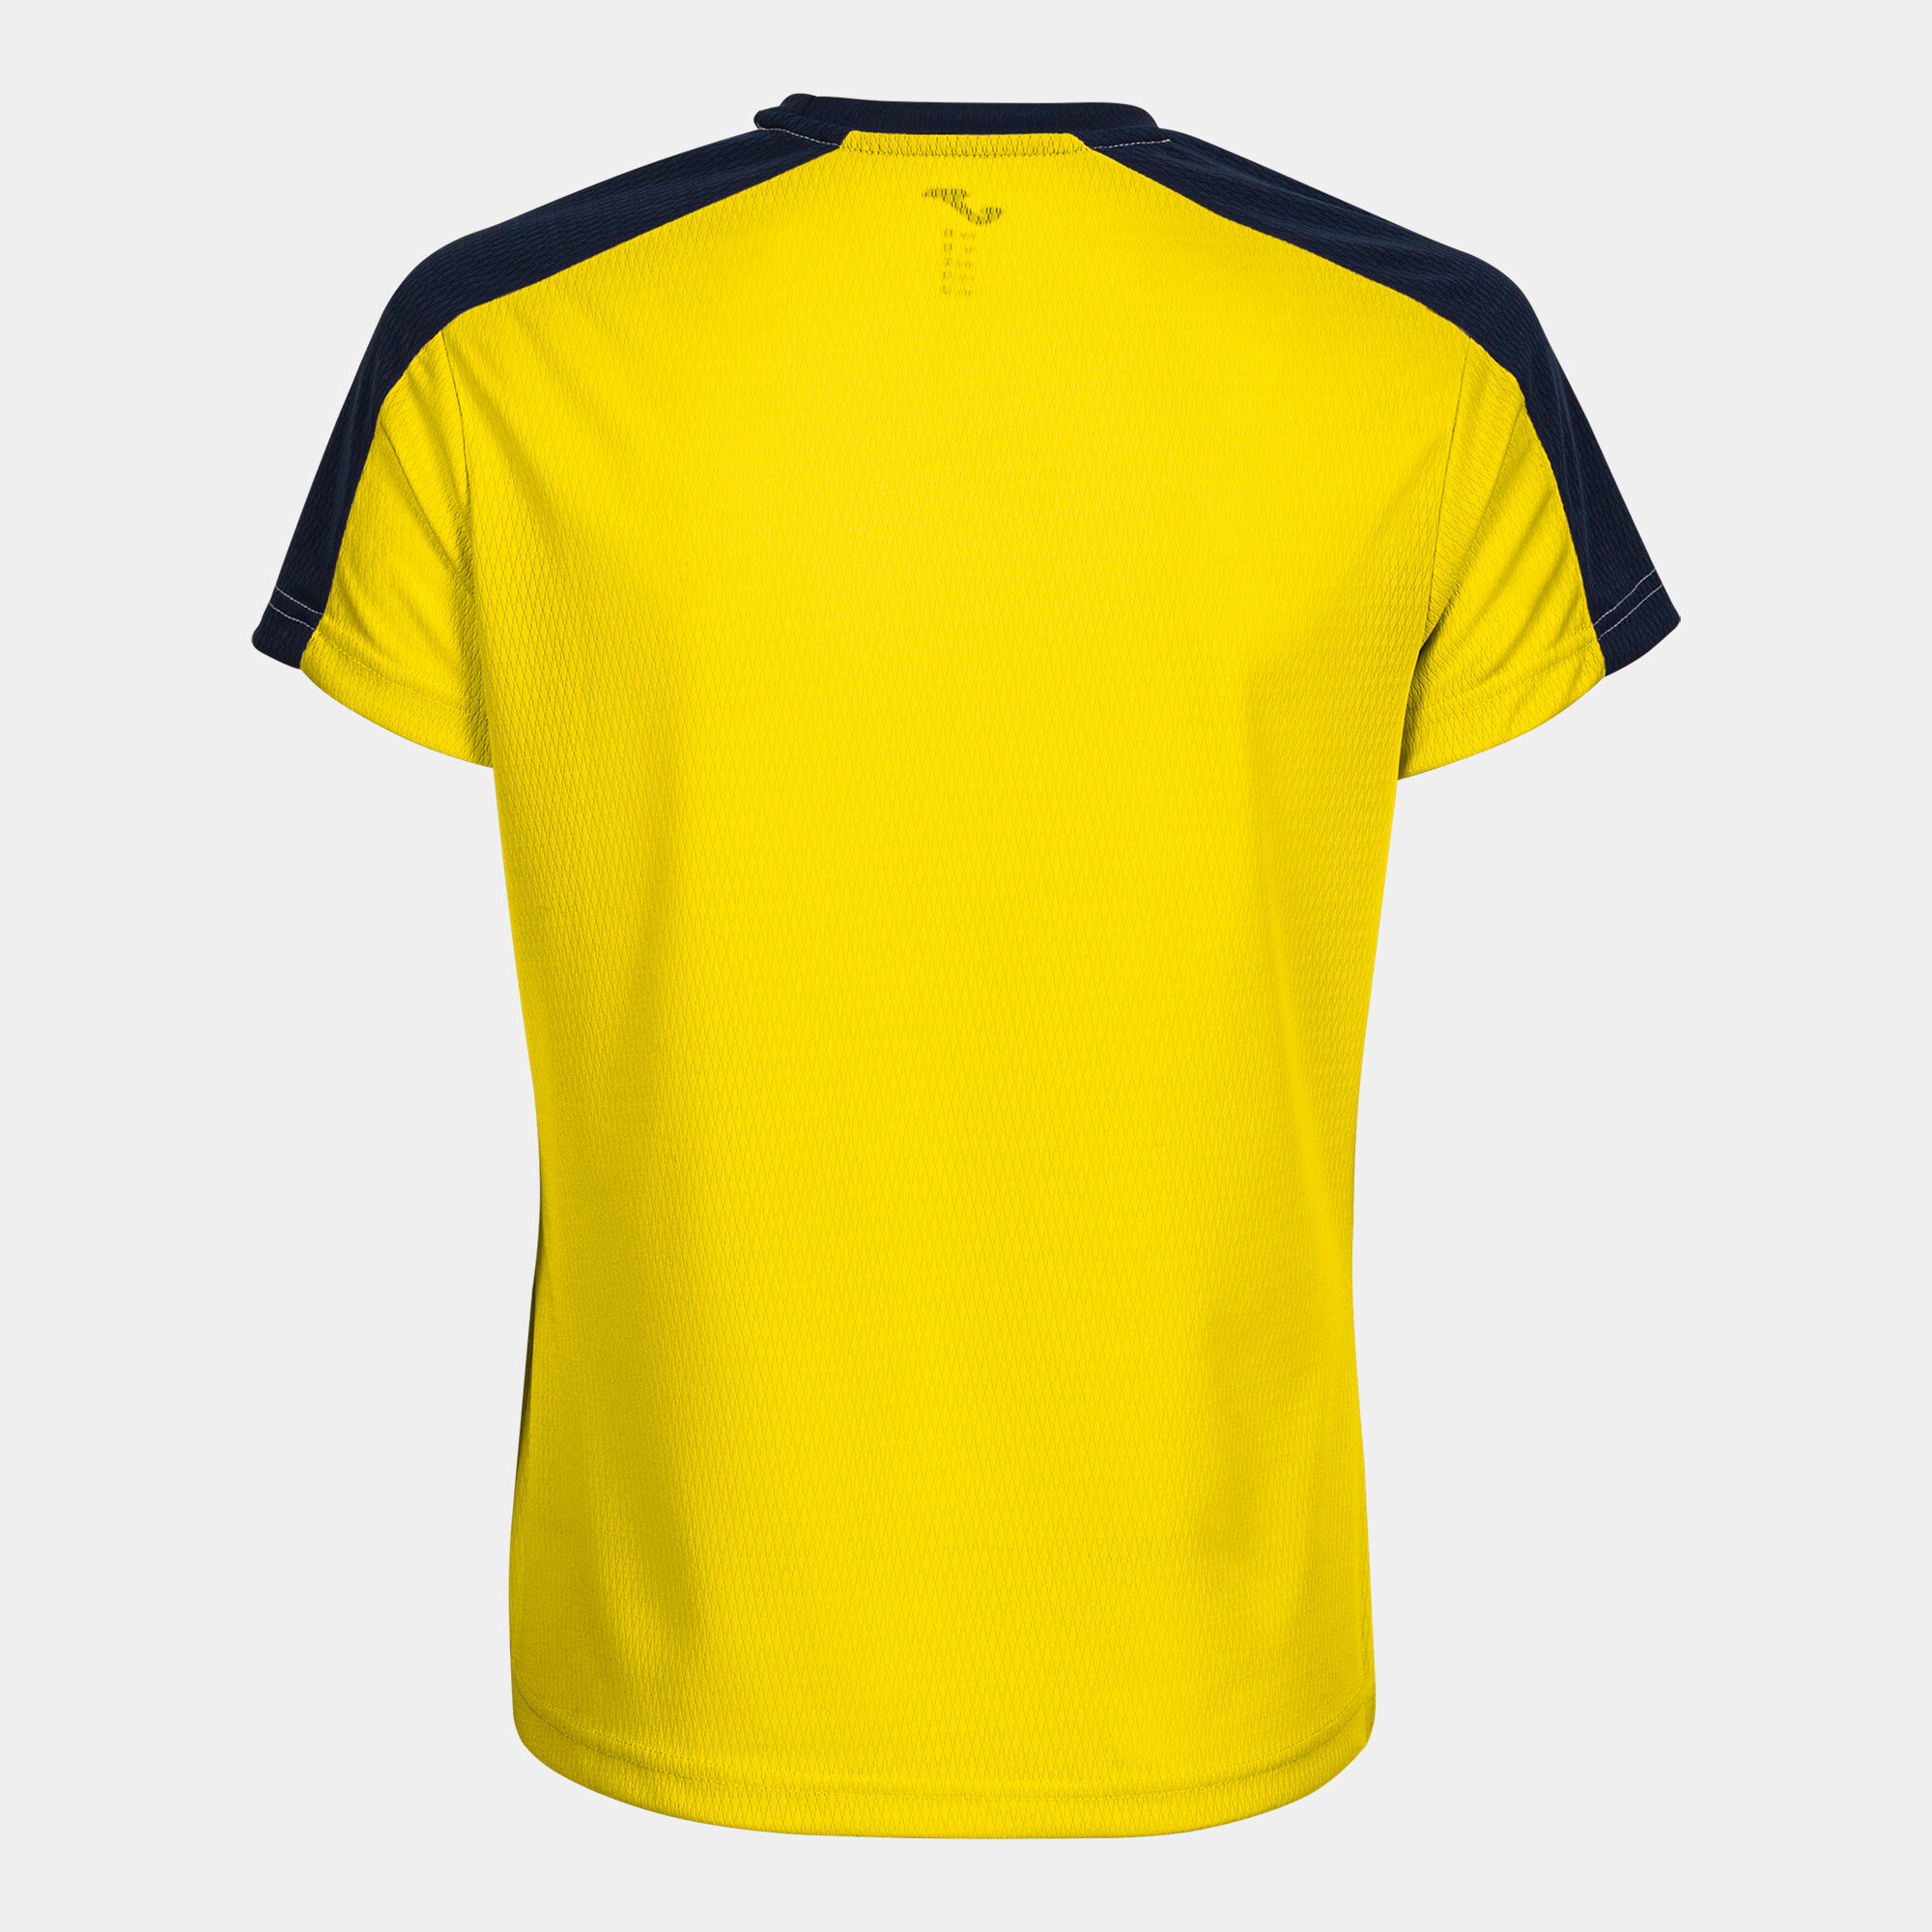 Camiseta manga corta mujer Eco Championship amarillo marino